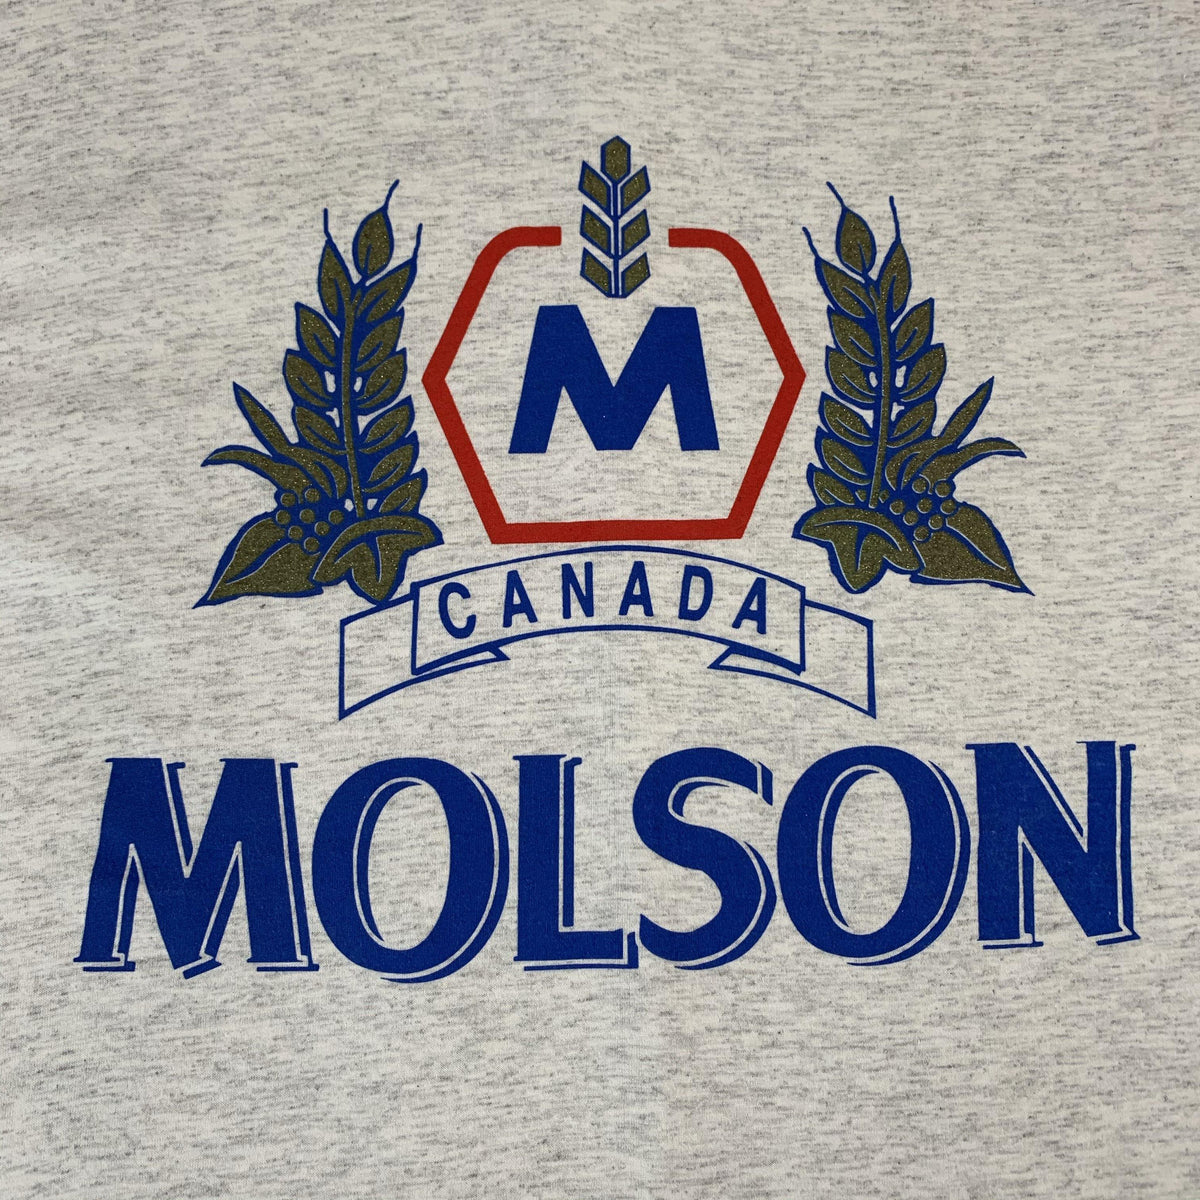 Vintage Molson Ice “Canada” T-Shirt - jointcustodydc